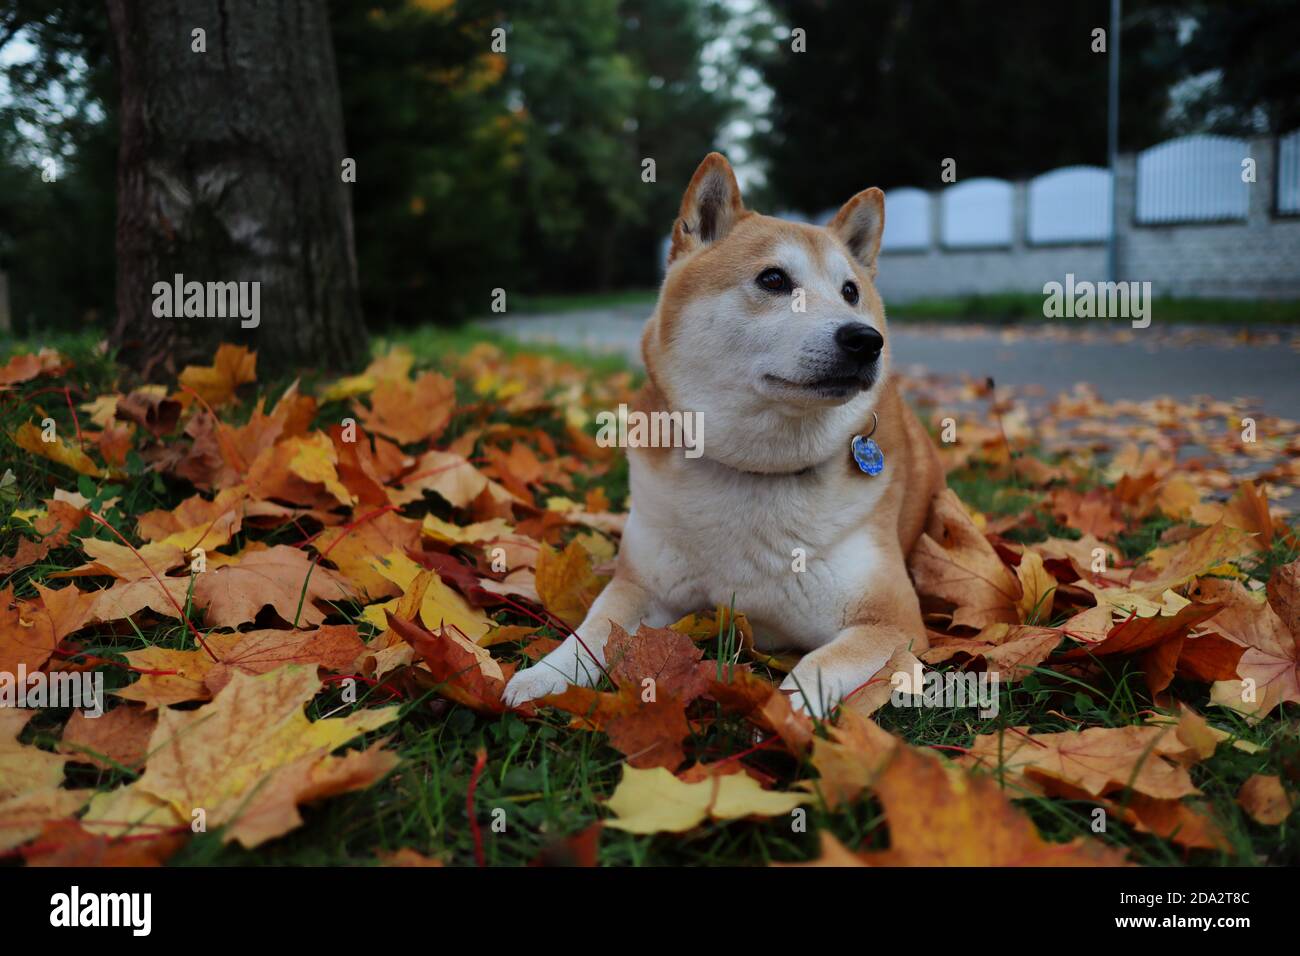 Adorable Shiba Inu Lies Down on Fallen Autumn Leaves during Fall Season. Shiba is a Japanese Breed Dog. Stock Photo